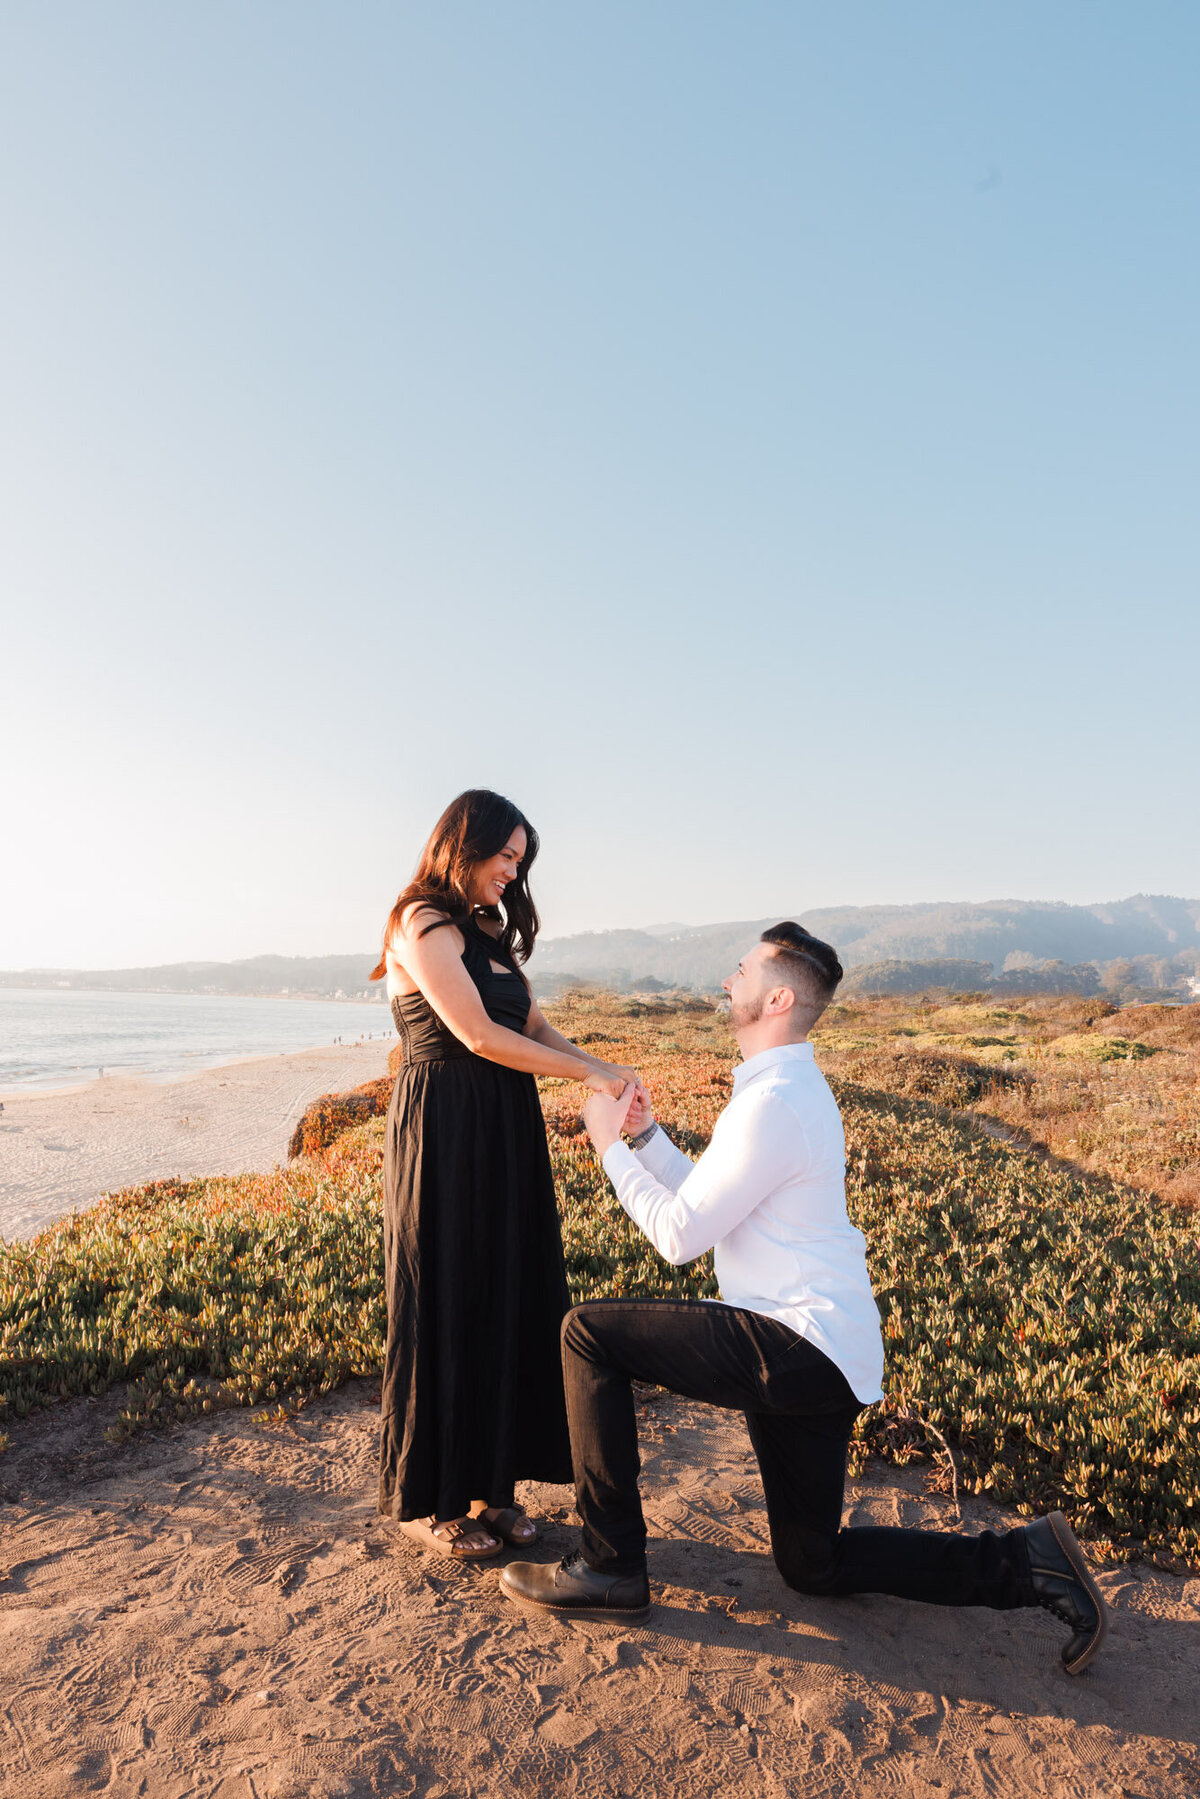 Kyle Woolum + Stephanie-Proposal Engagement-Half Moon Bay-Dunes Beach-San Francisco Wedding Photographer-San Francisco Photographer-Half Moon Bay Photographer-Emily Pillon Photography-S-092323-36